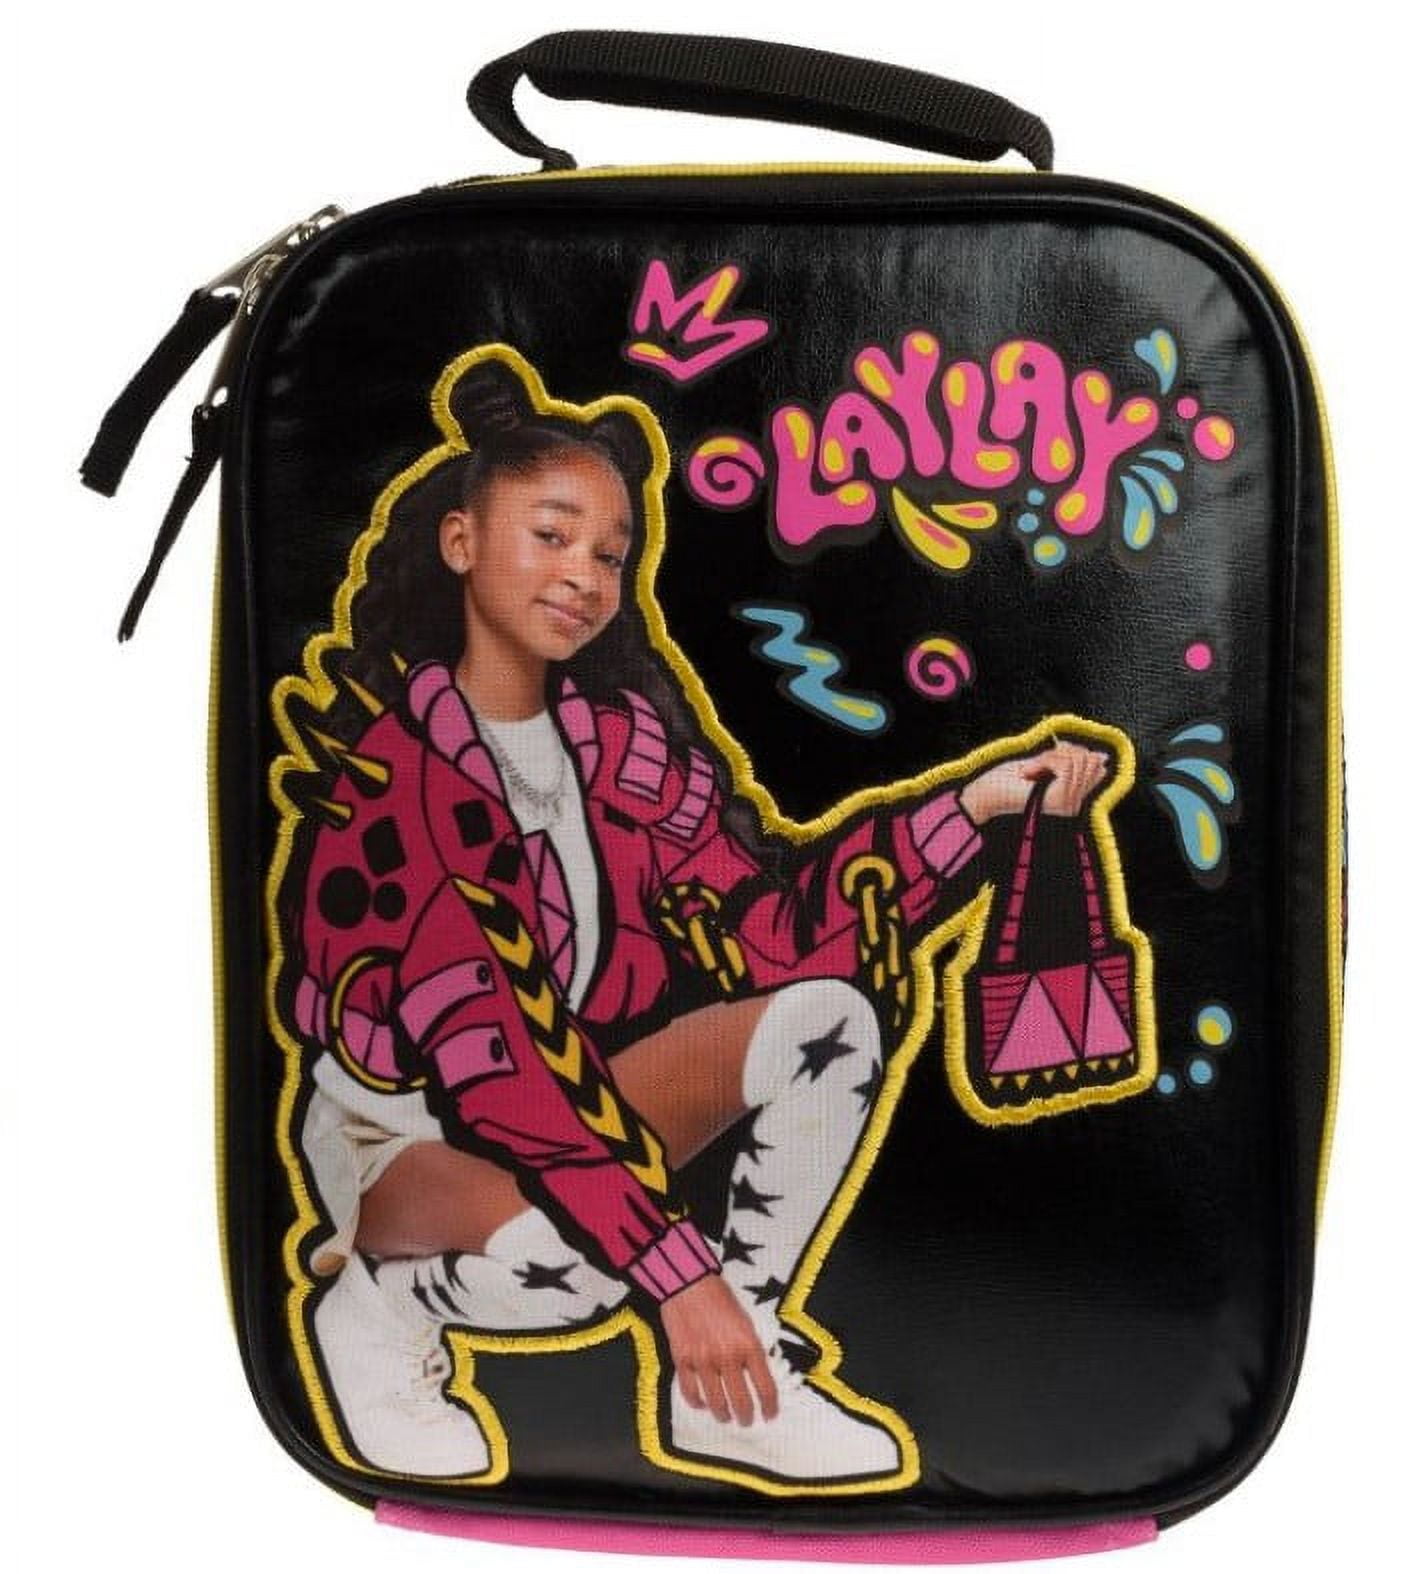 Nickelodeon Lay Lay Lunch Bag - Black